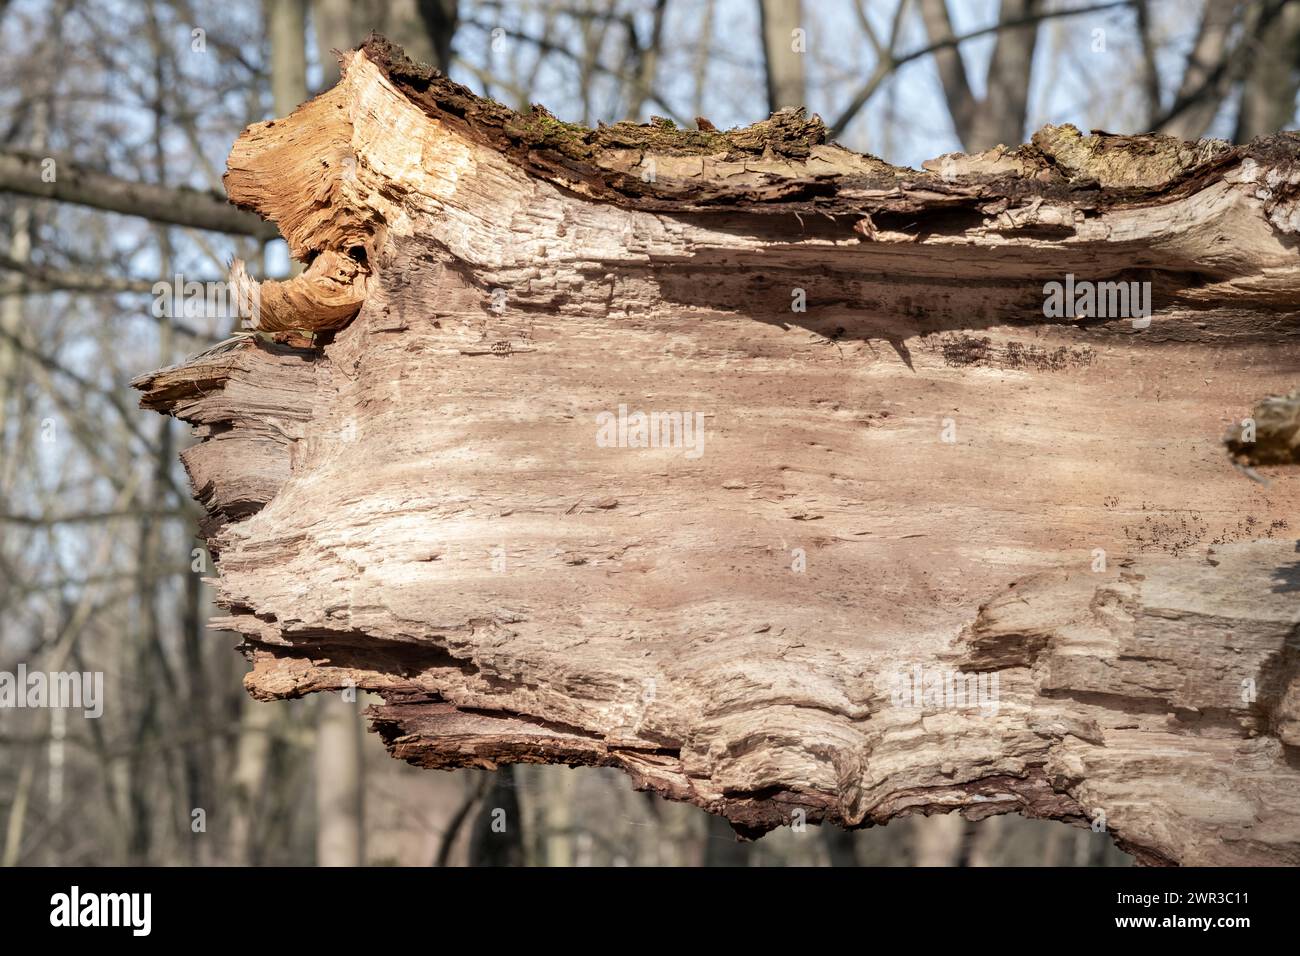 Macro image of brittle, decaying deadwood Stock Photo